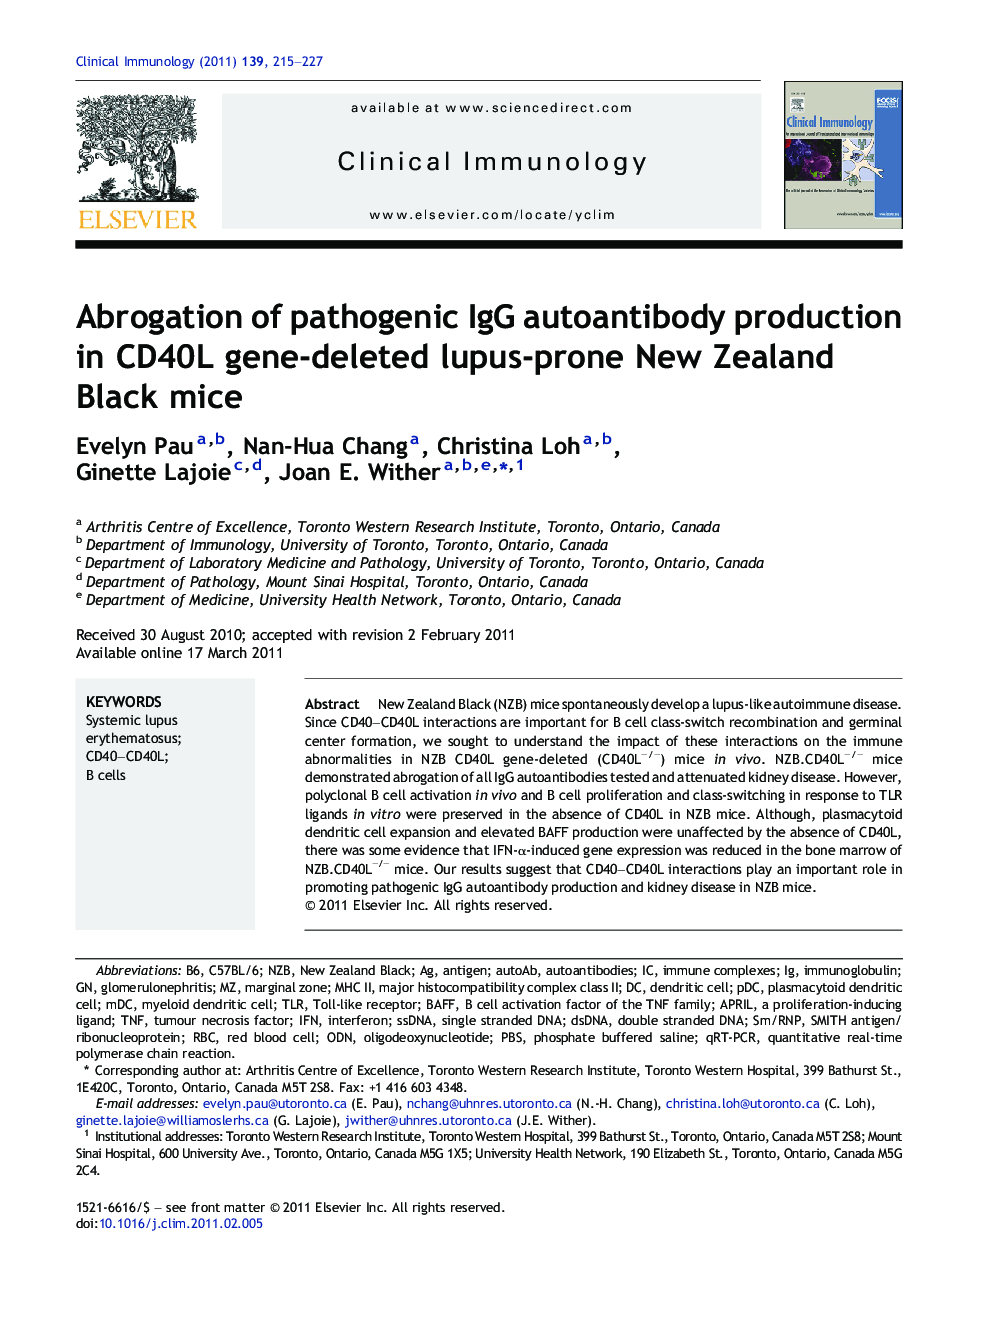 Abrogation of pathogenic IgG autoantibody production in CD40L gene-deleted lupus-prone New Zealand Black mice